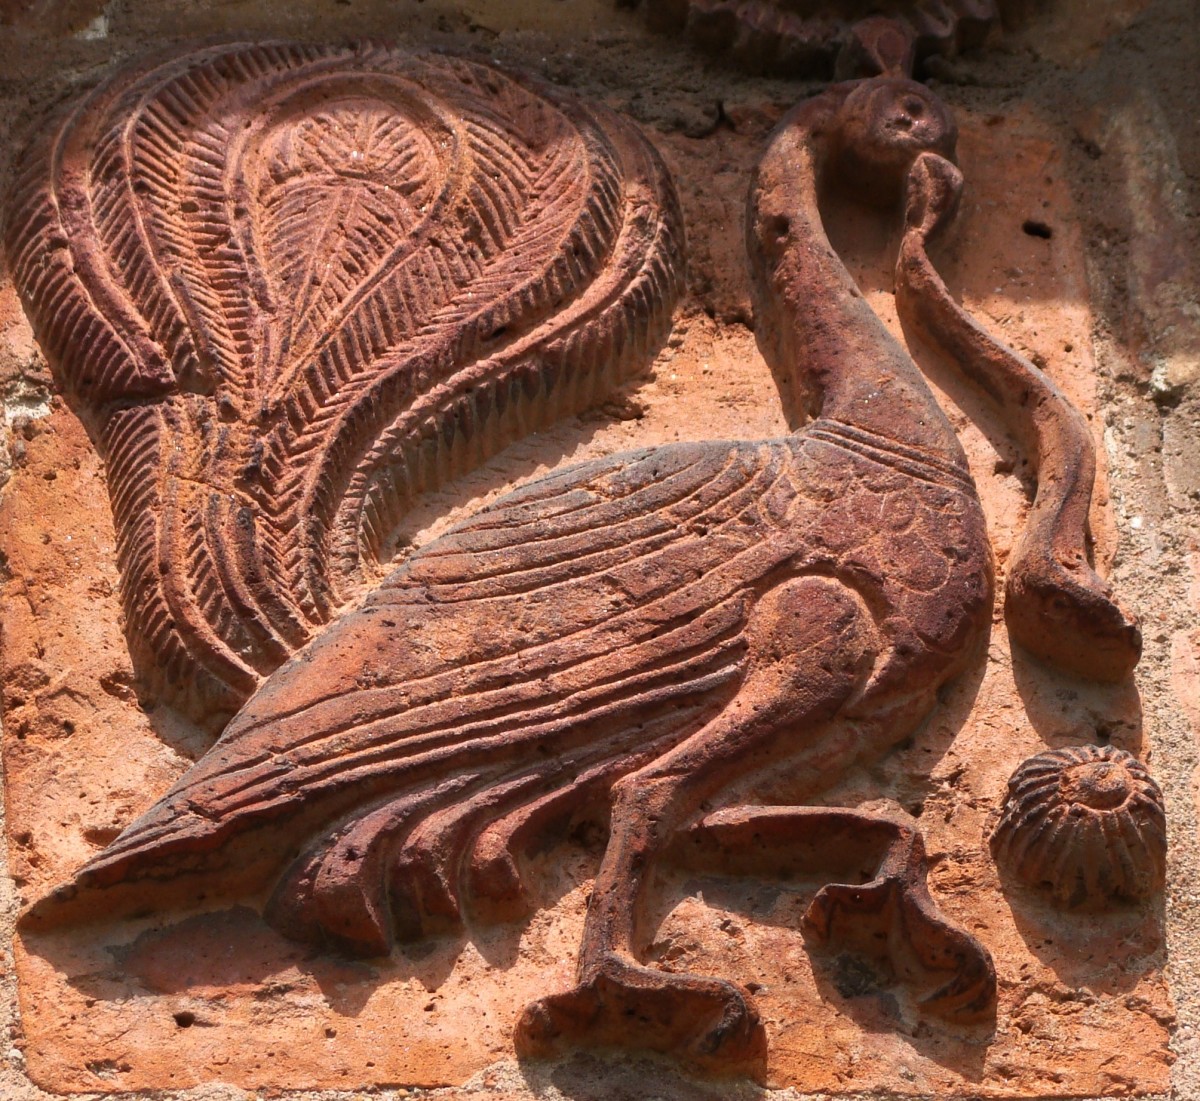 Bird motif 3 - a peacock with a snake in its beak